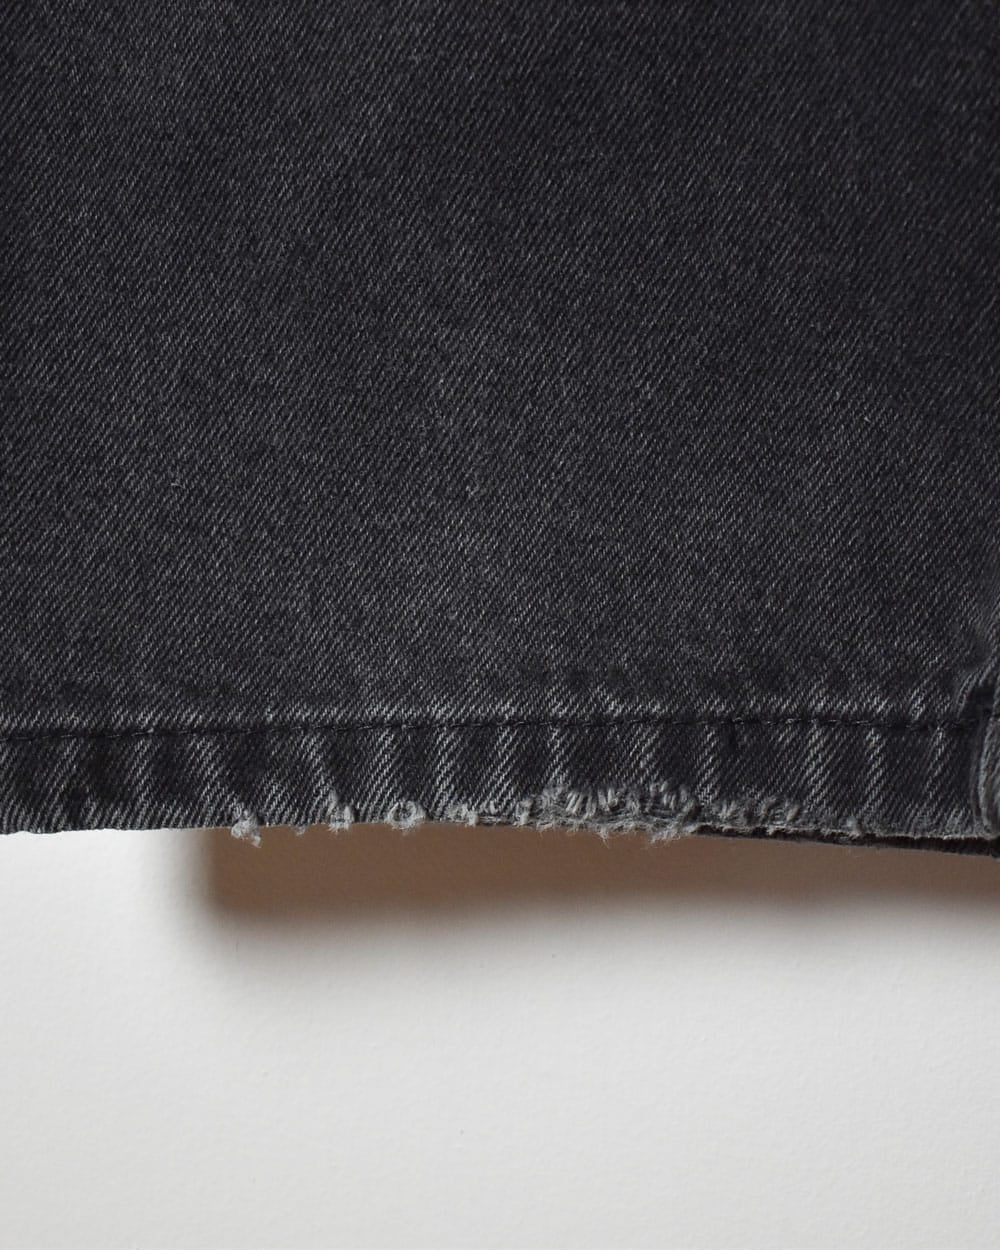 Black Levi's 550 USA Jeans - W36 L27